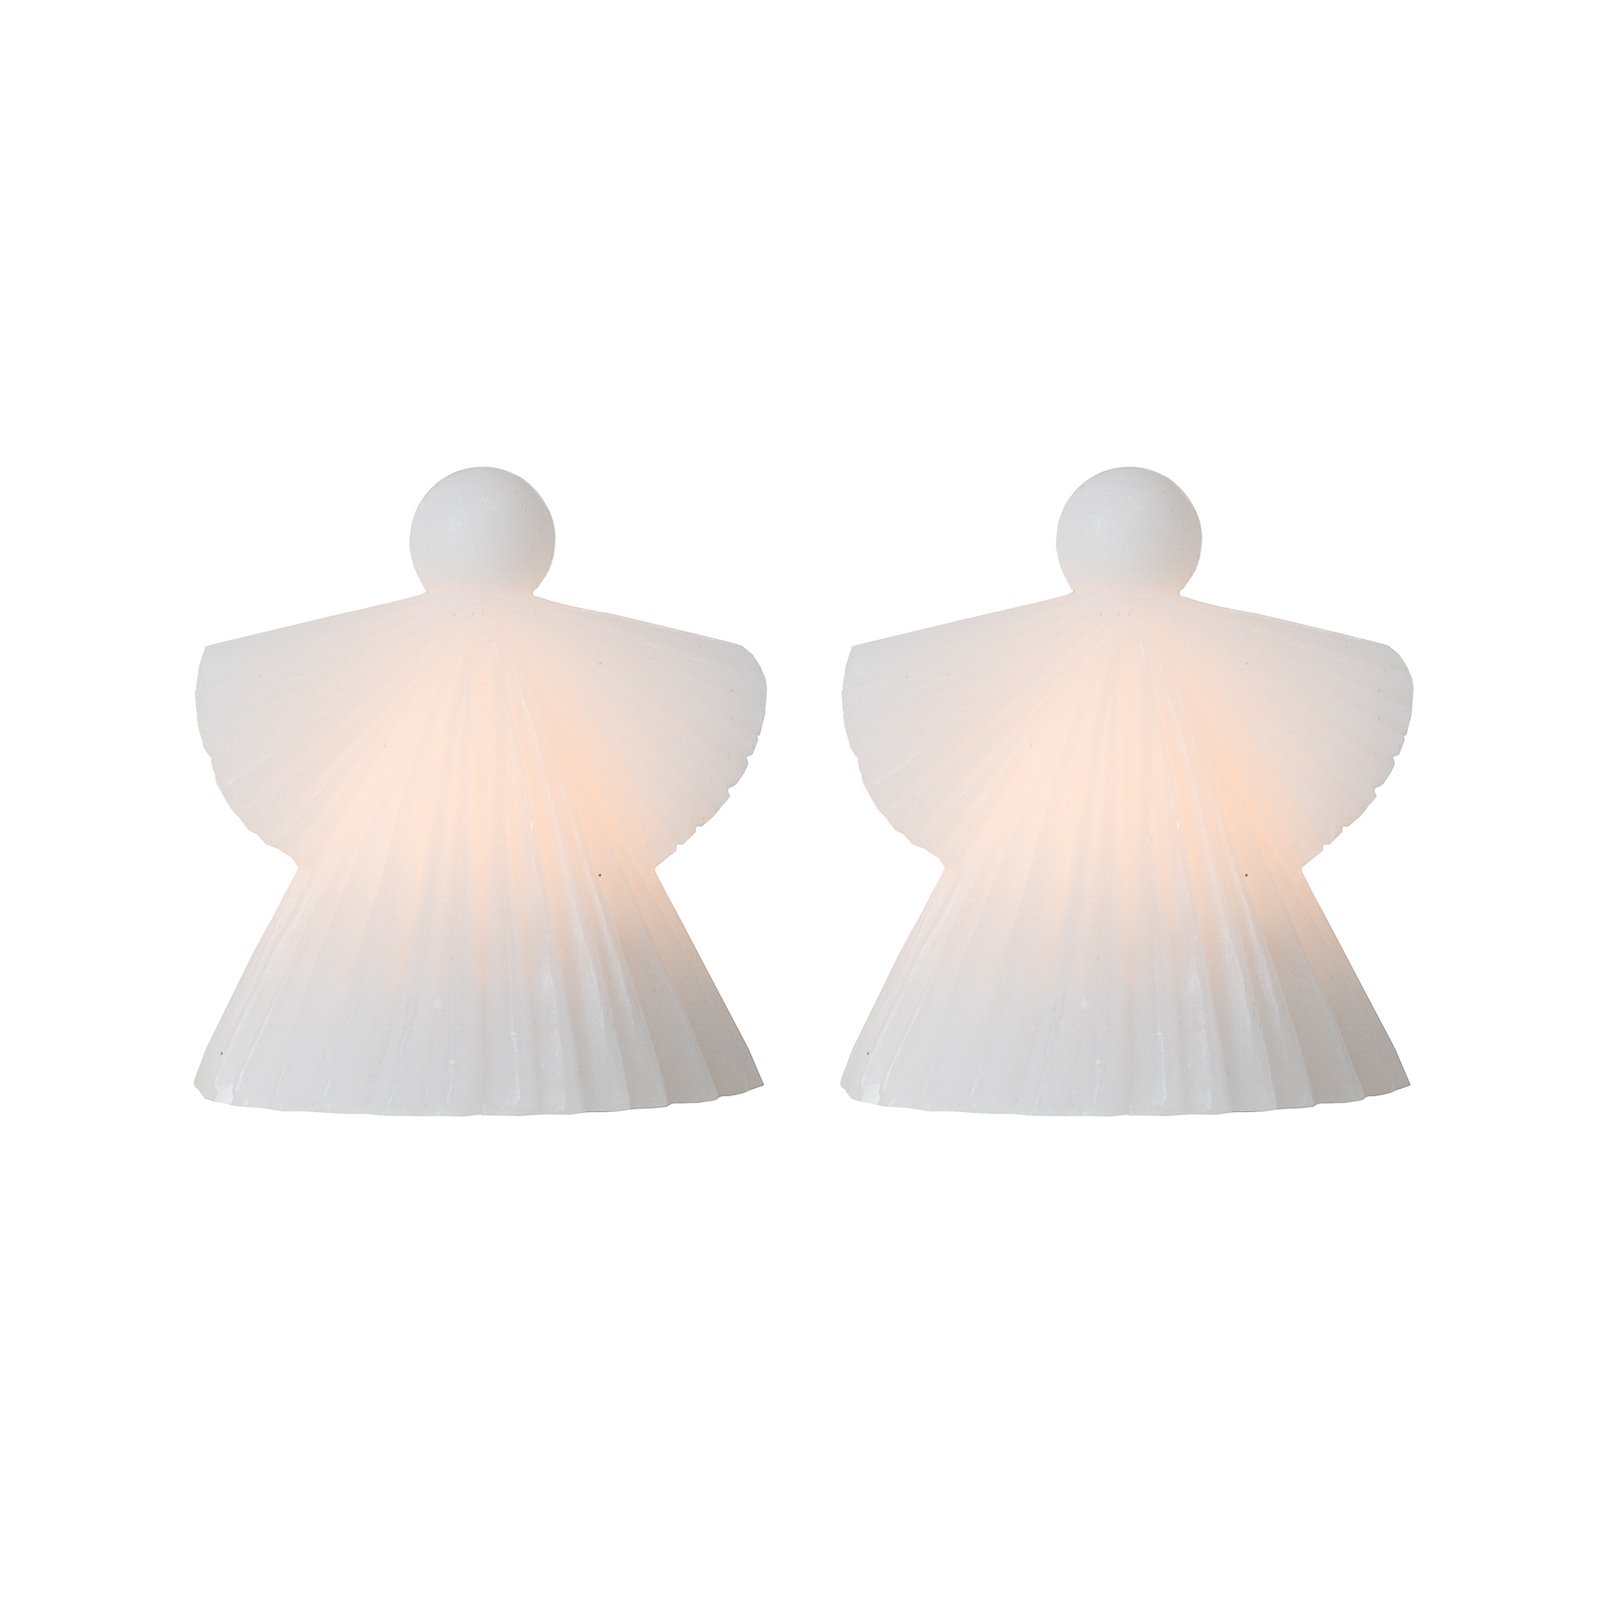 LED deco figura Asta, Angyal, viasz fehér, 10 cm 2